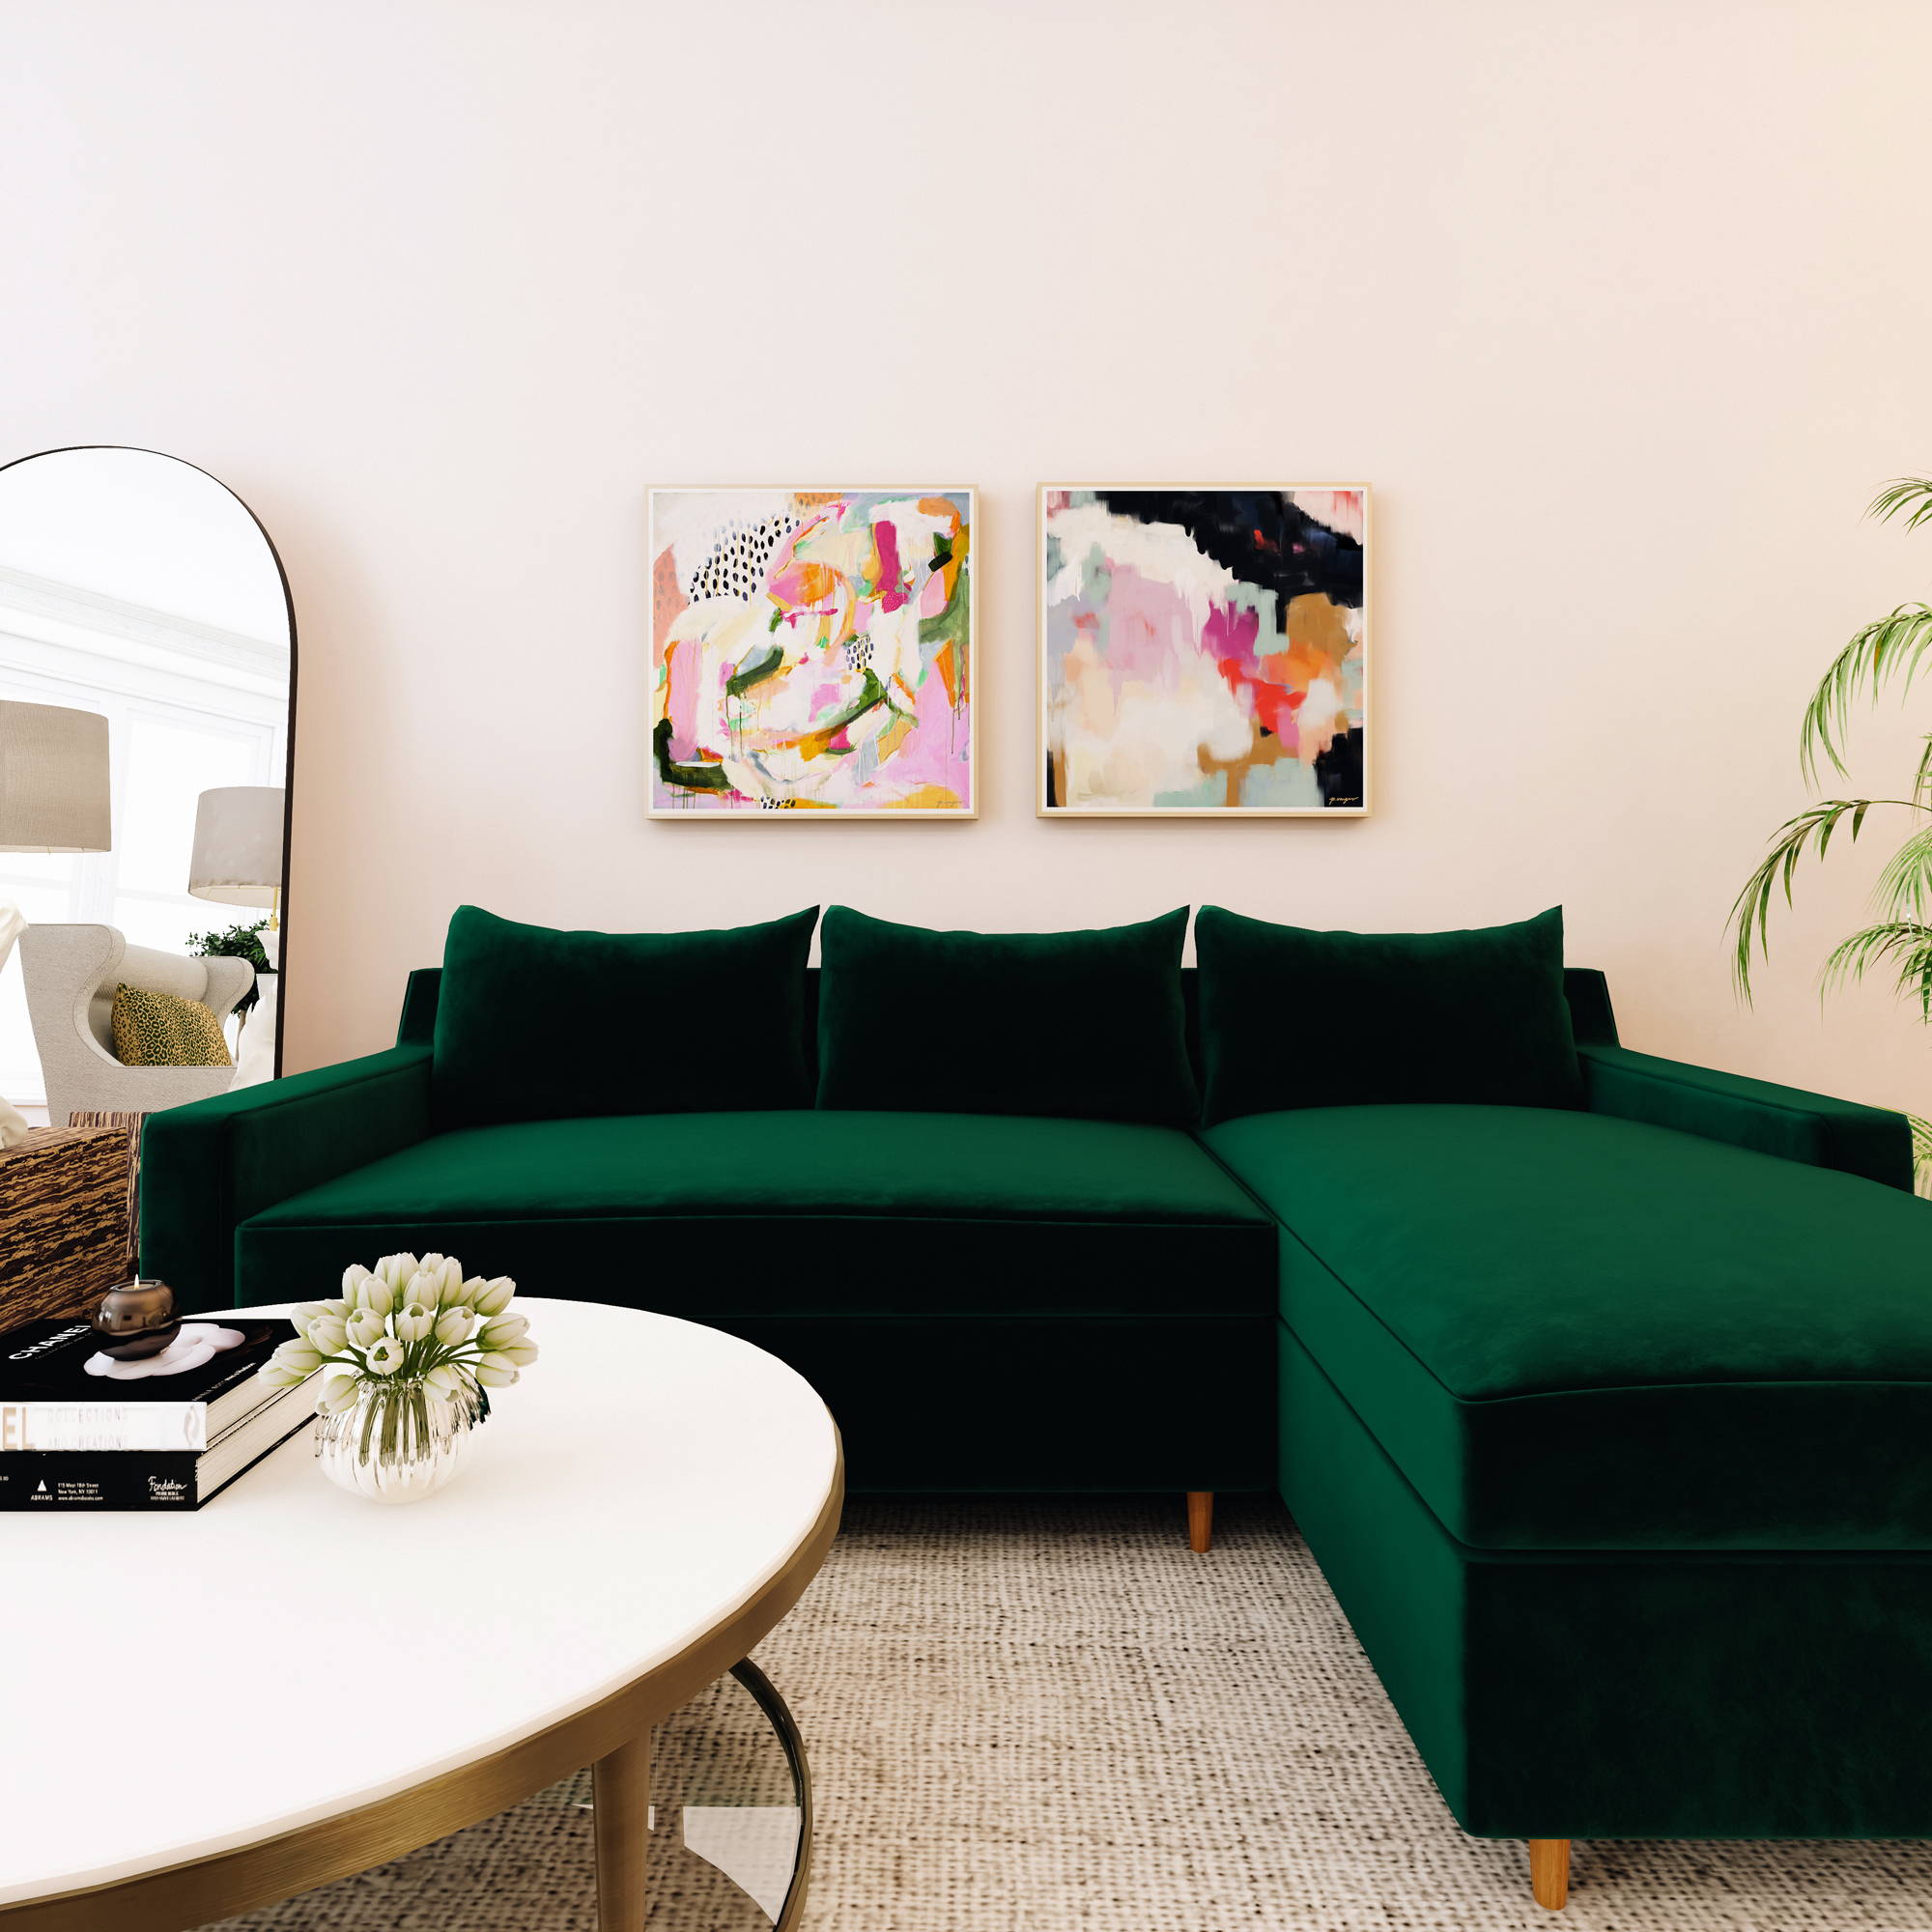 Abstract wall art pair over a green sofa